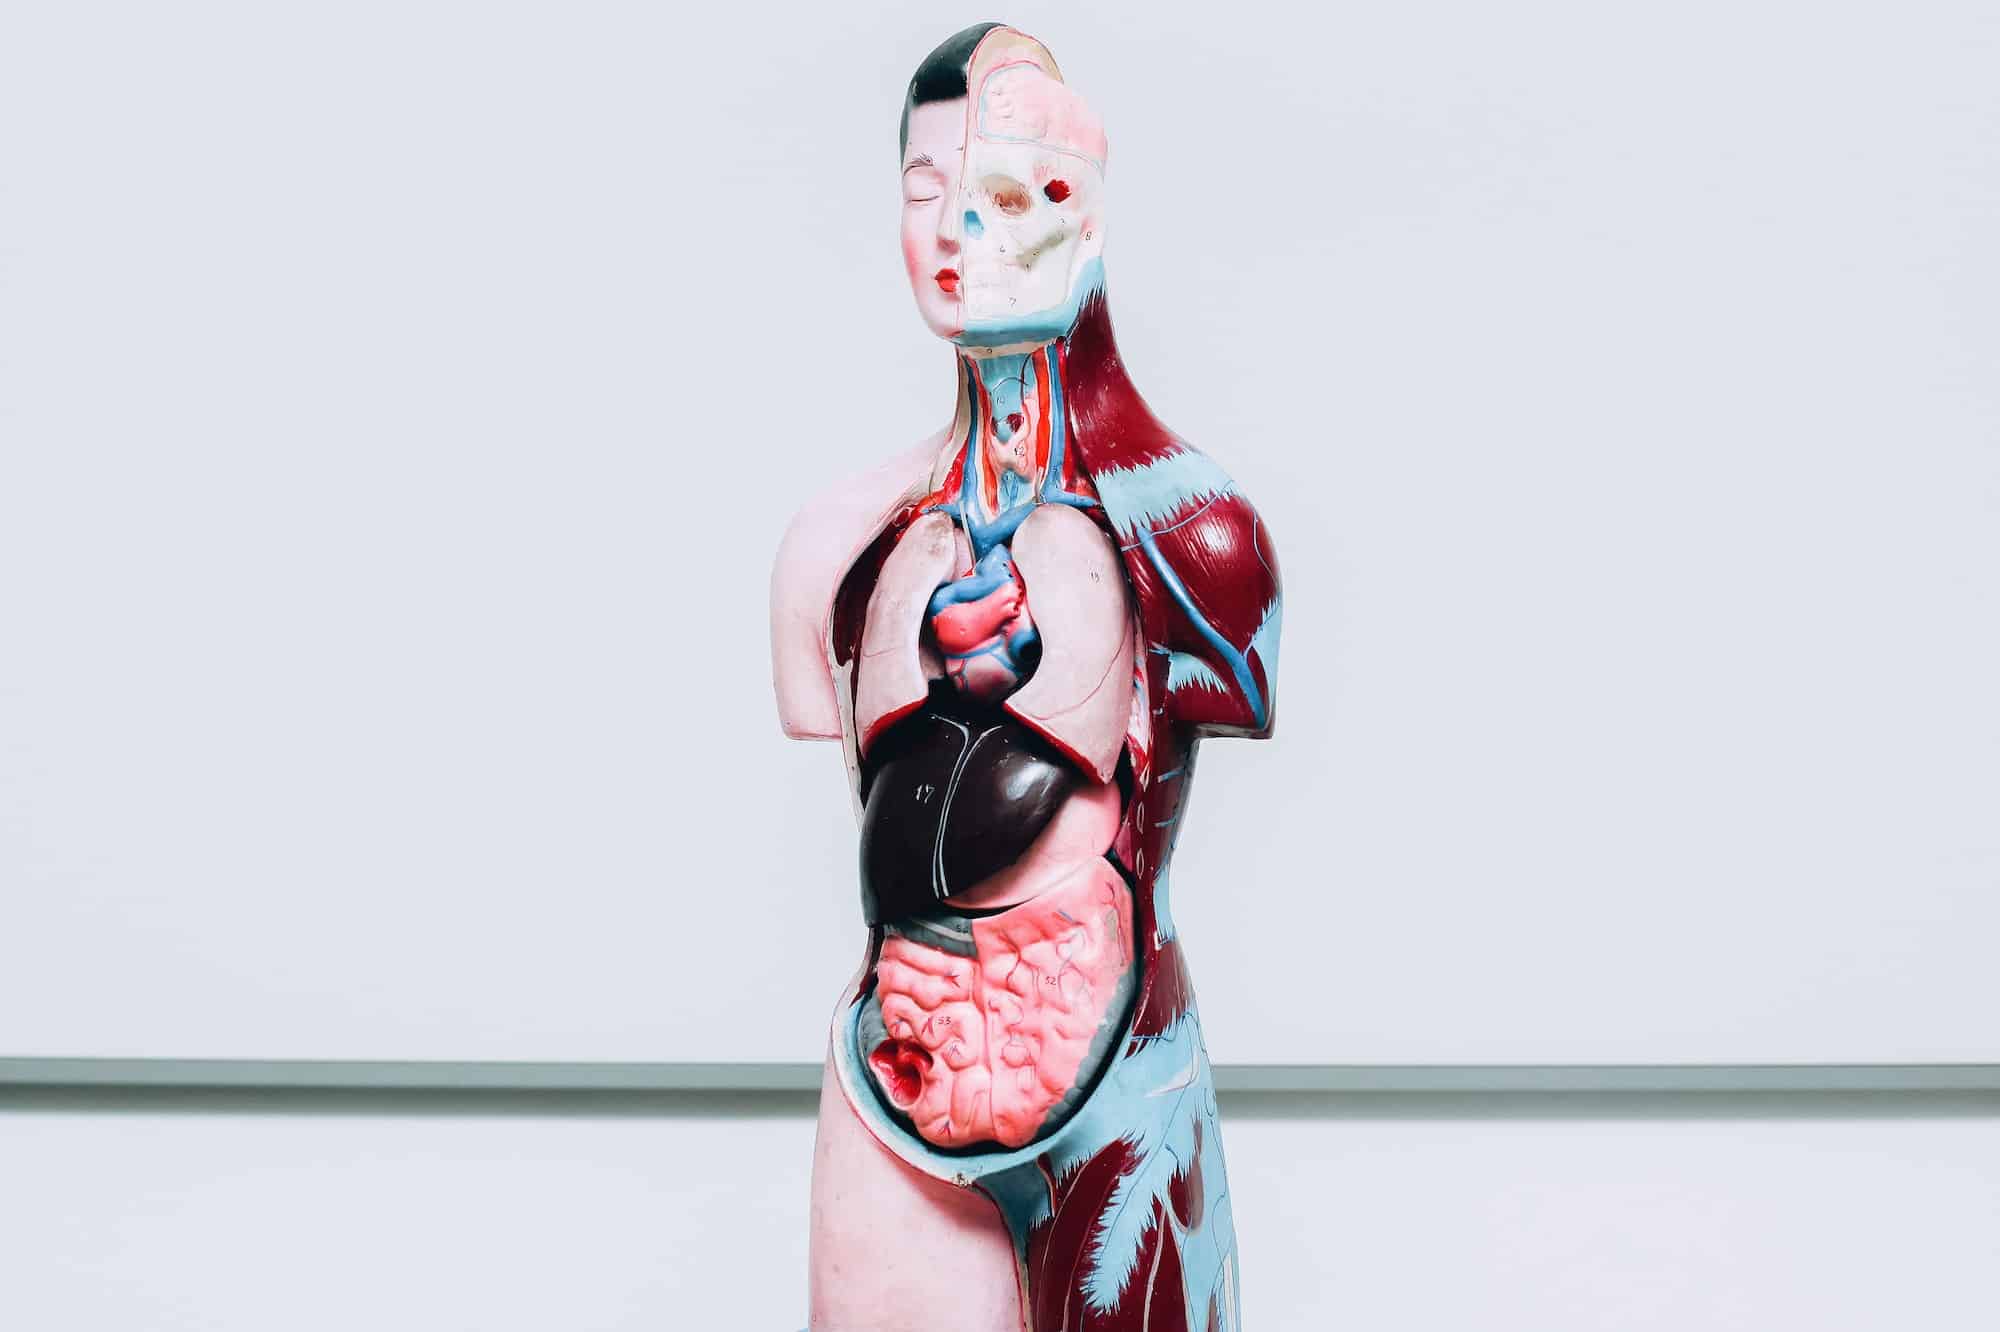 Human Internal organs dummy model